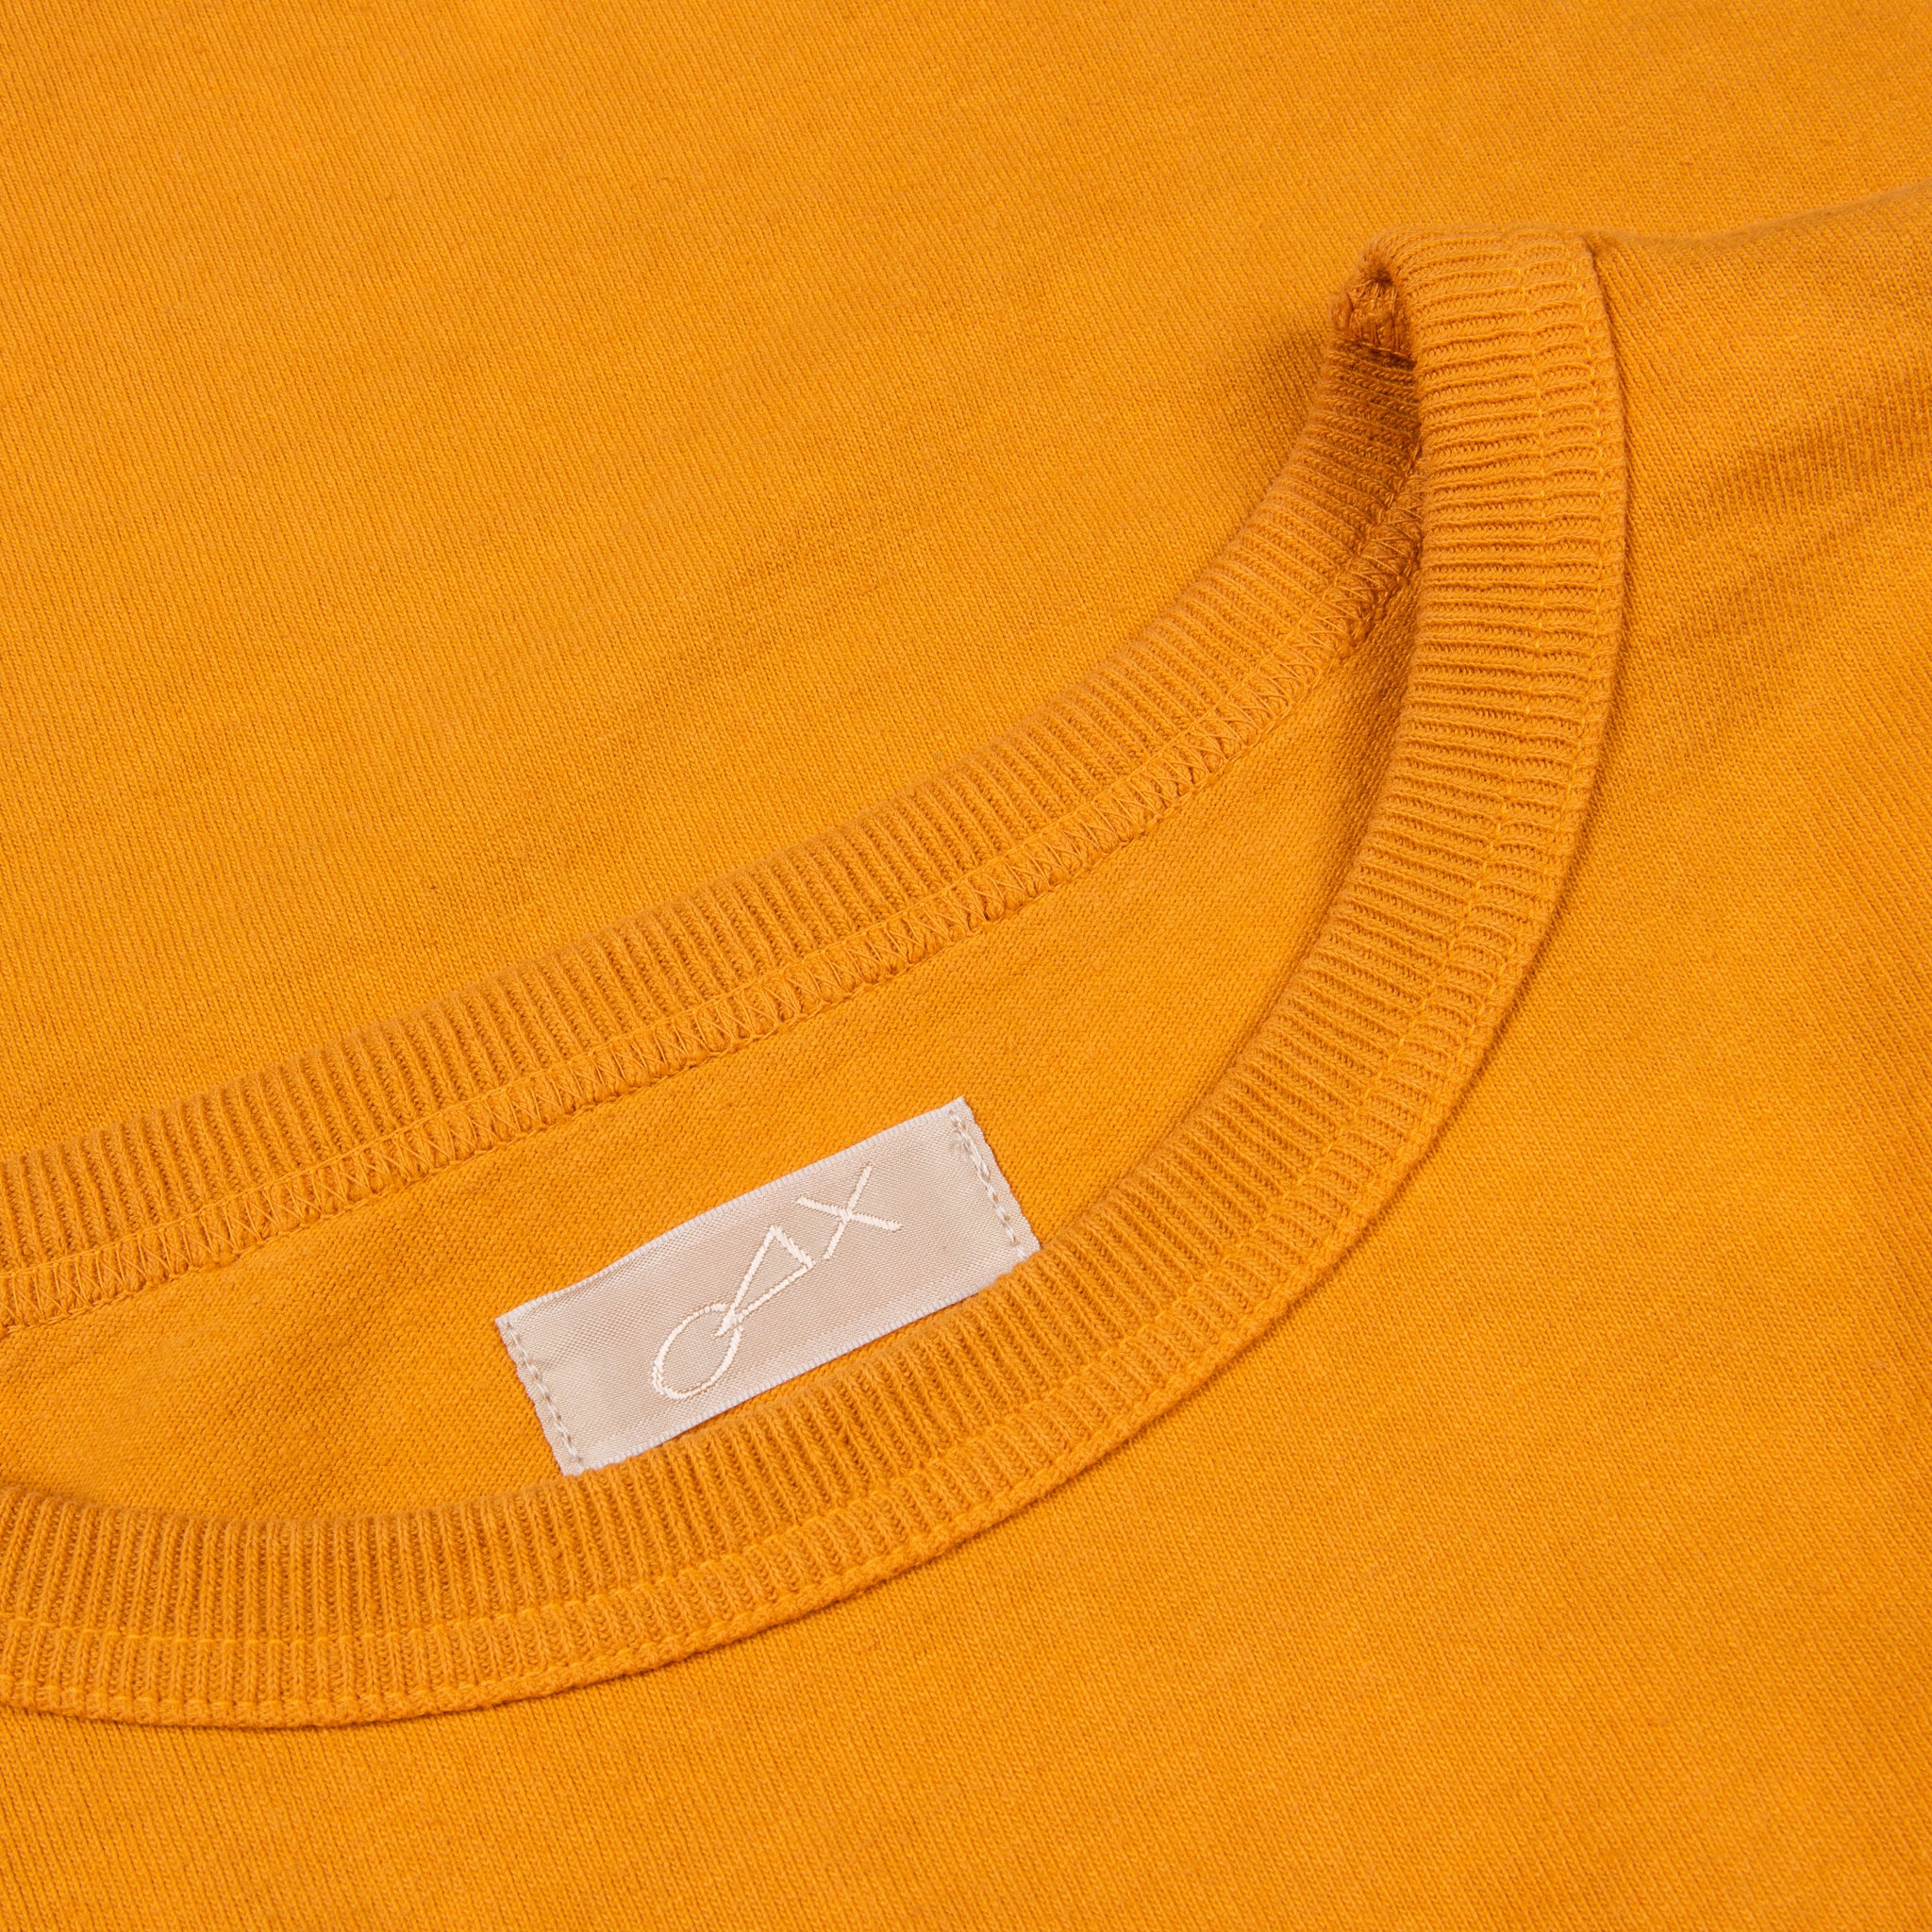 Maru Sankaku Peke 〇 △ × 9007 Short Sleeve T-Shirt Orange